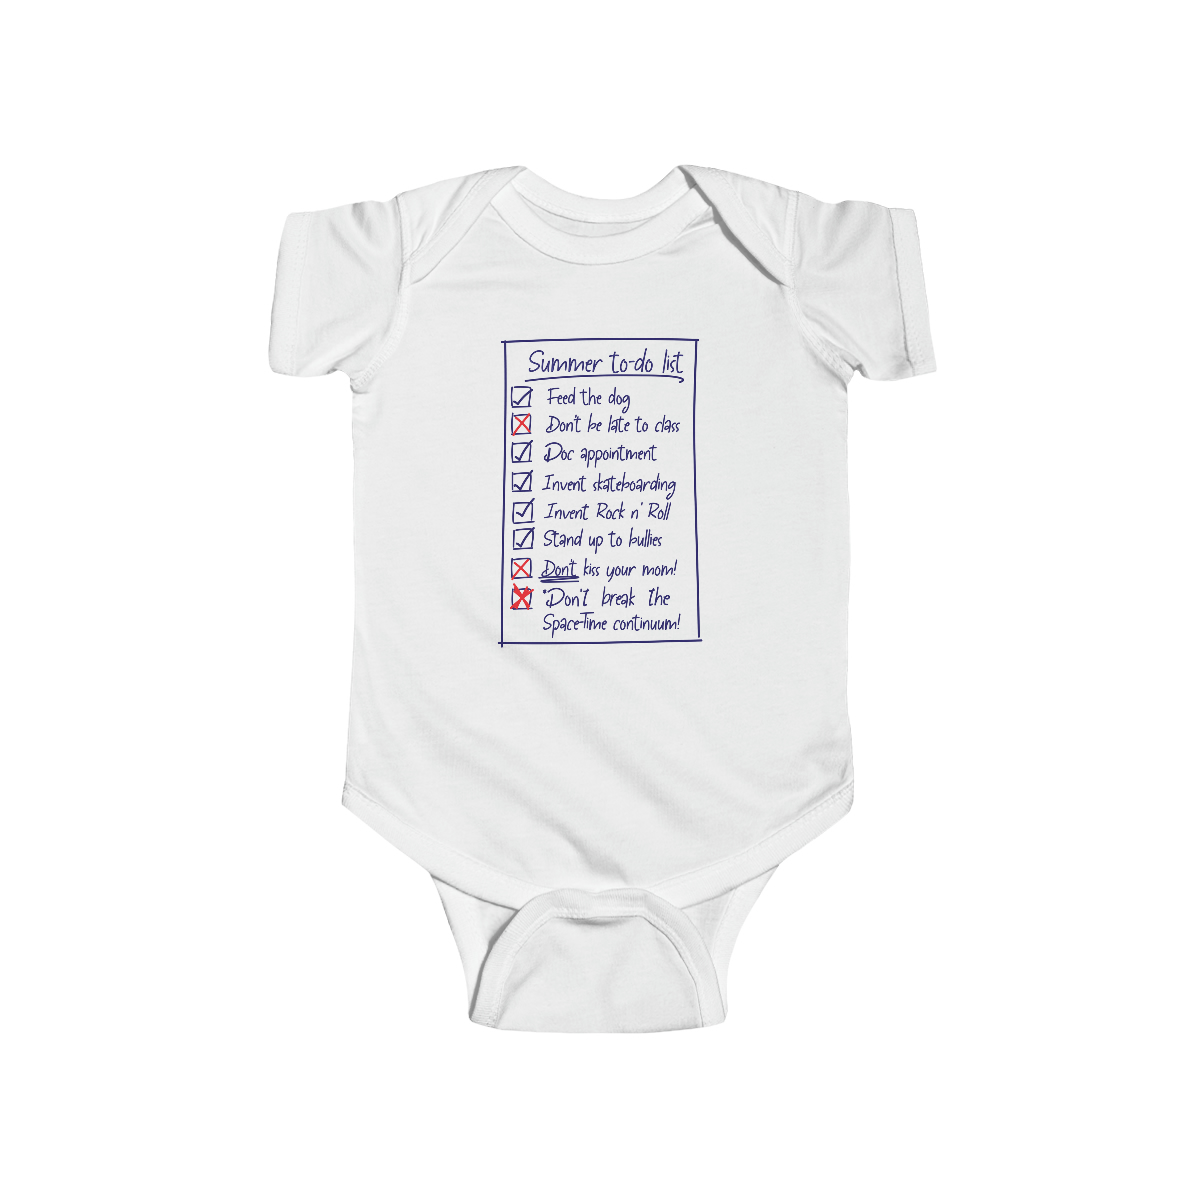 Summer List (light shirts) - Infant Fine Jersey Bodysuit